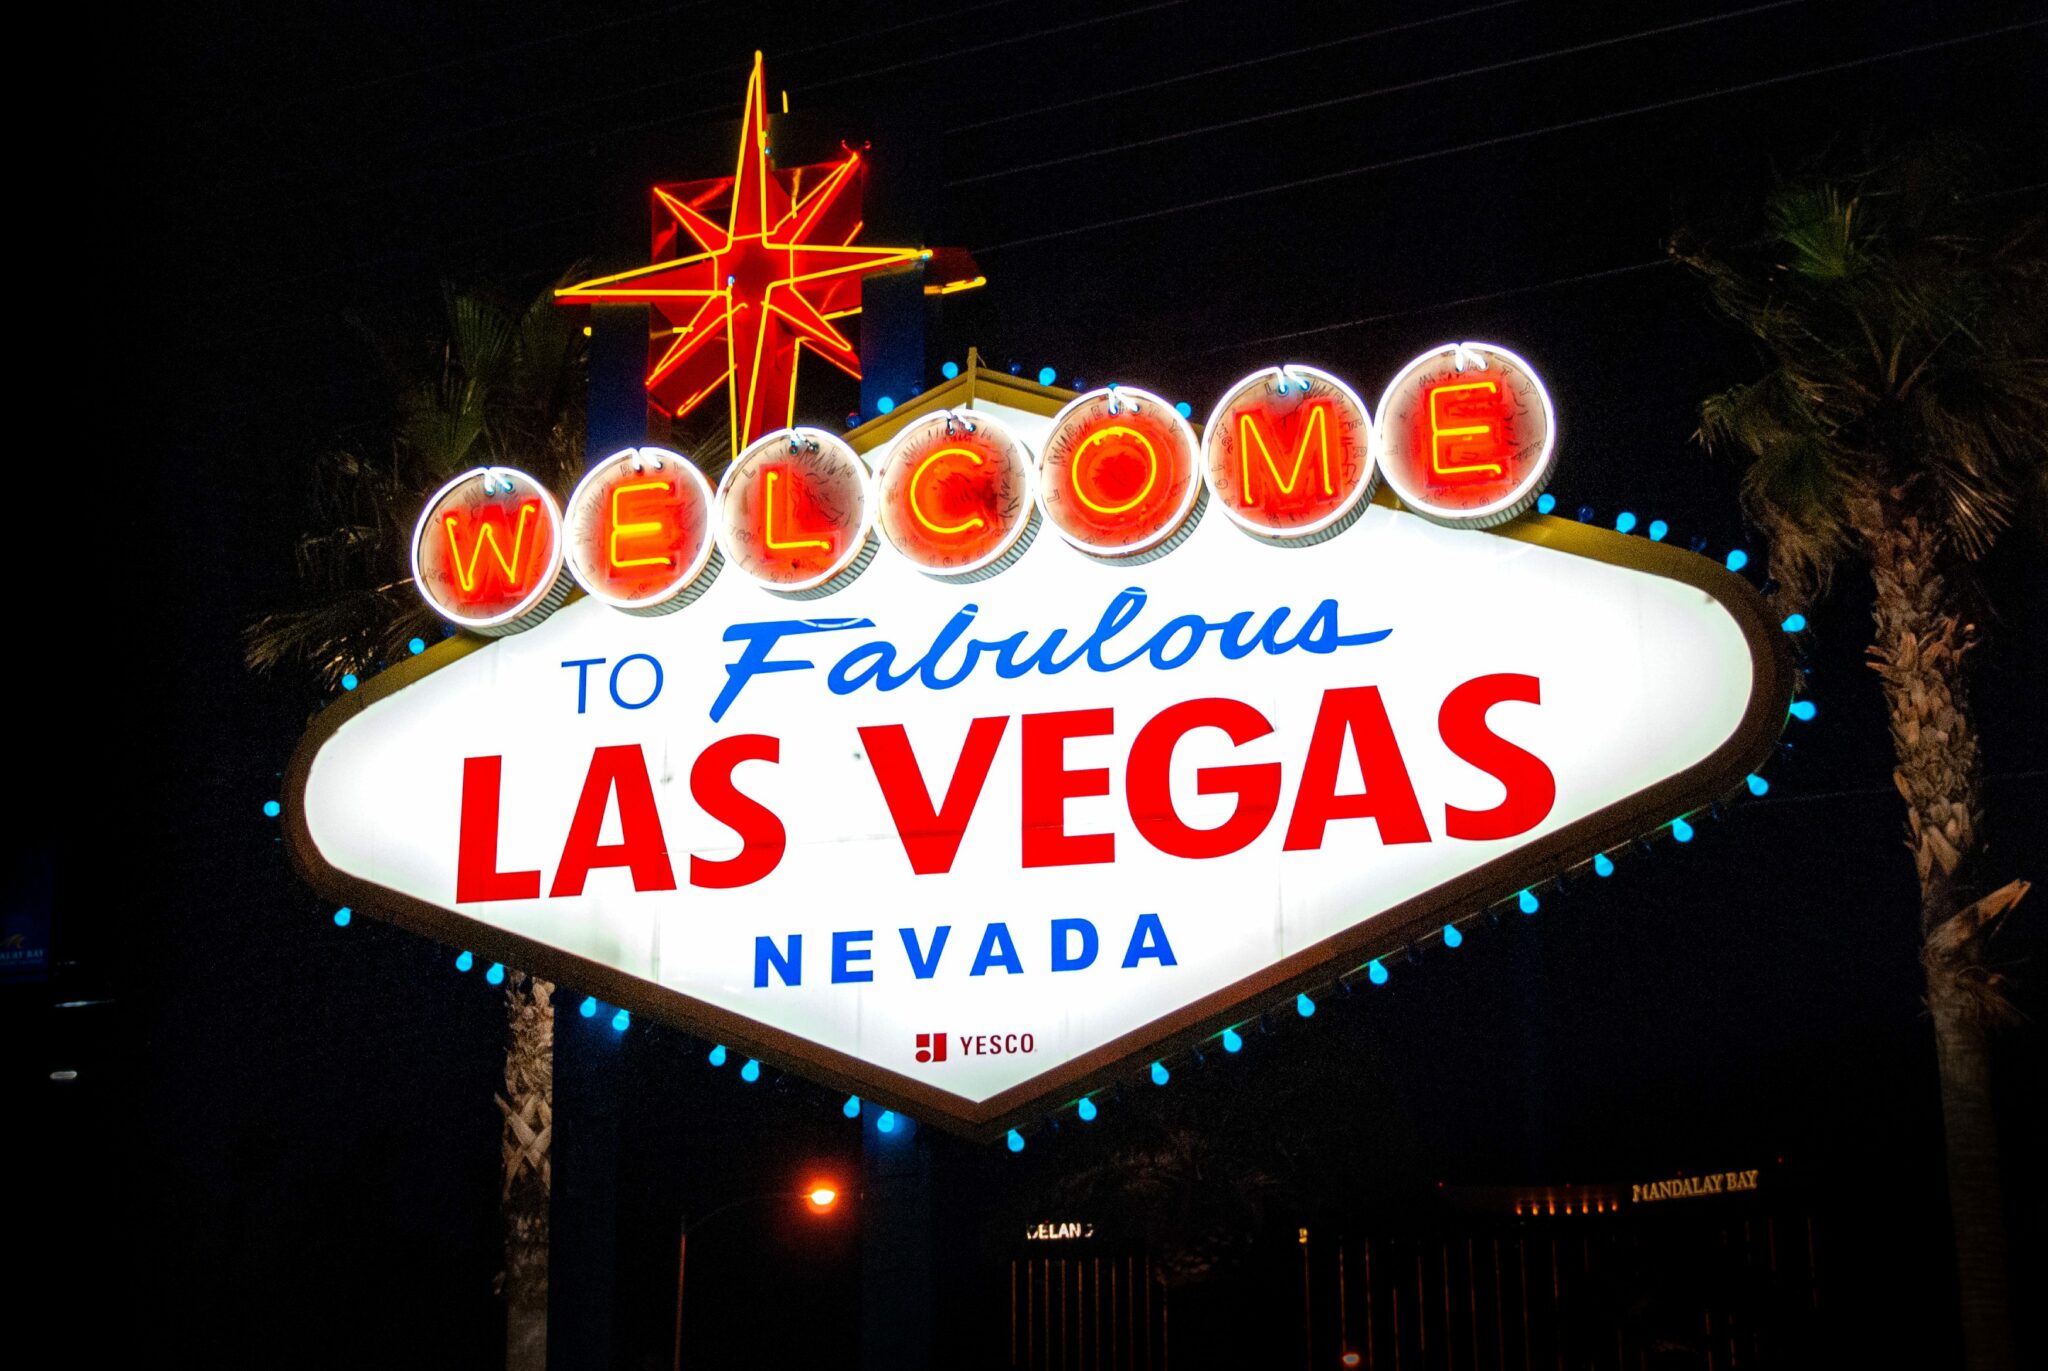 Las Vegas light up sign